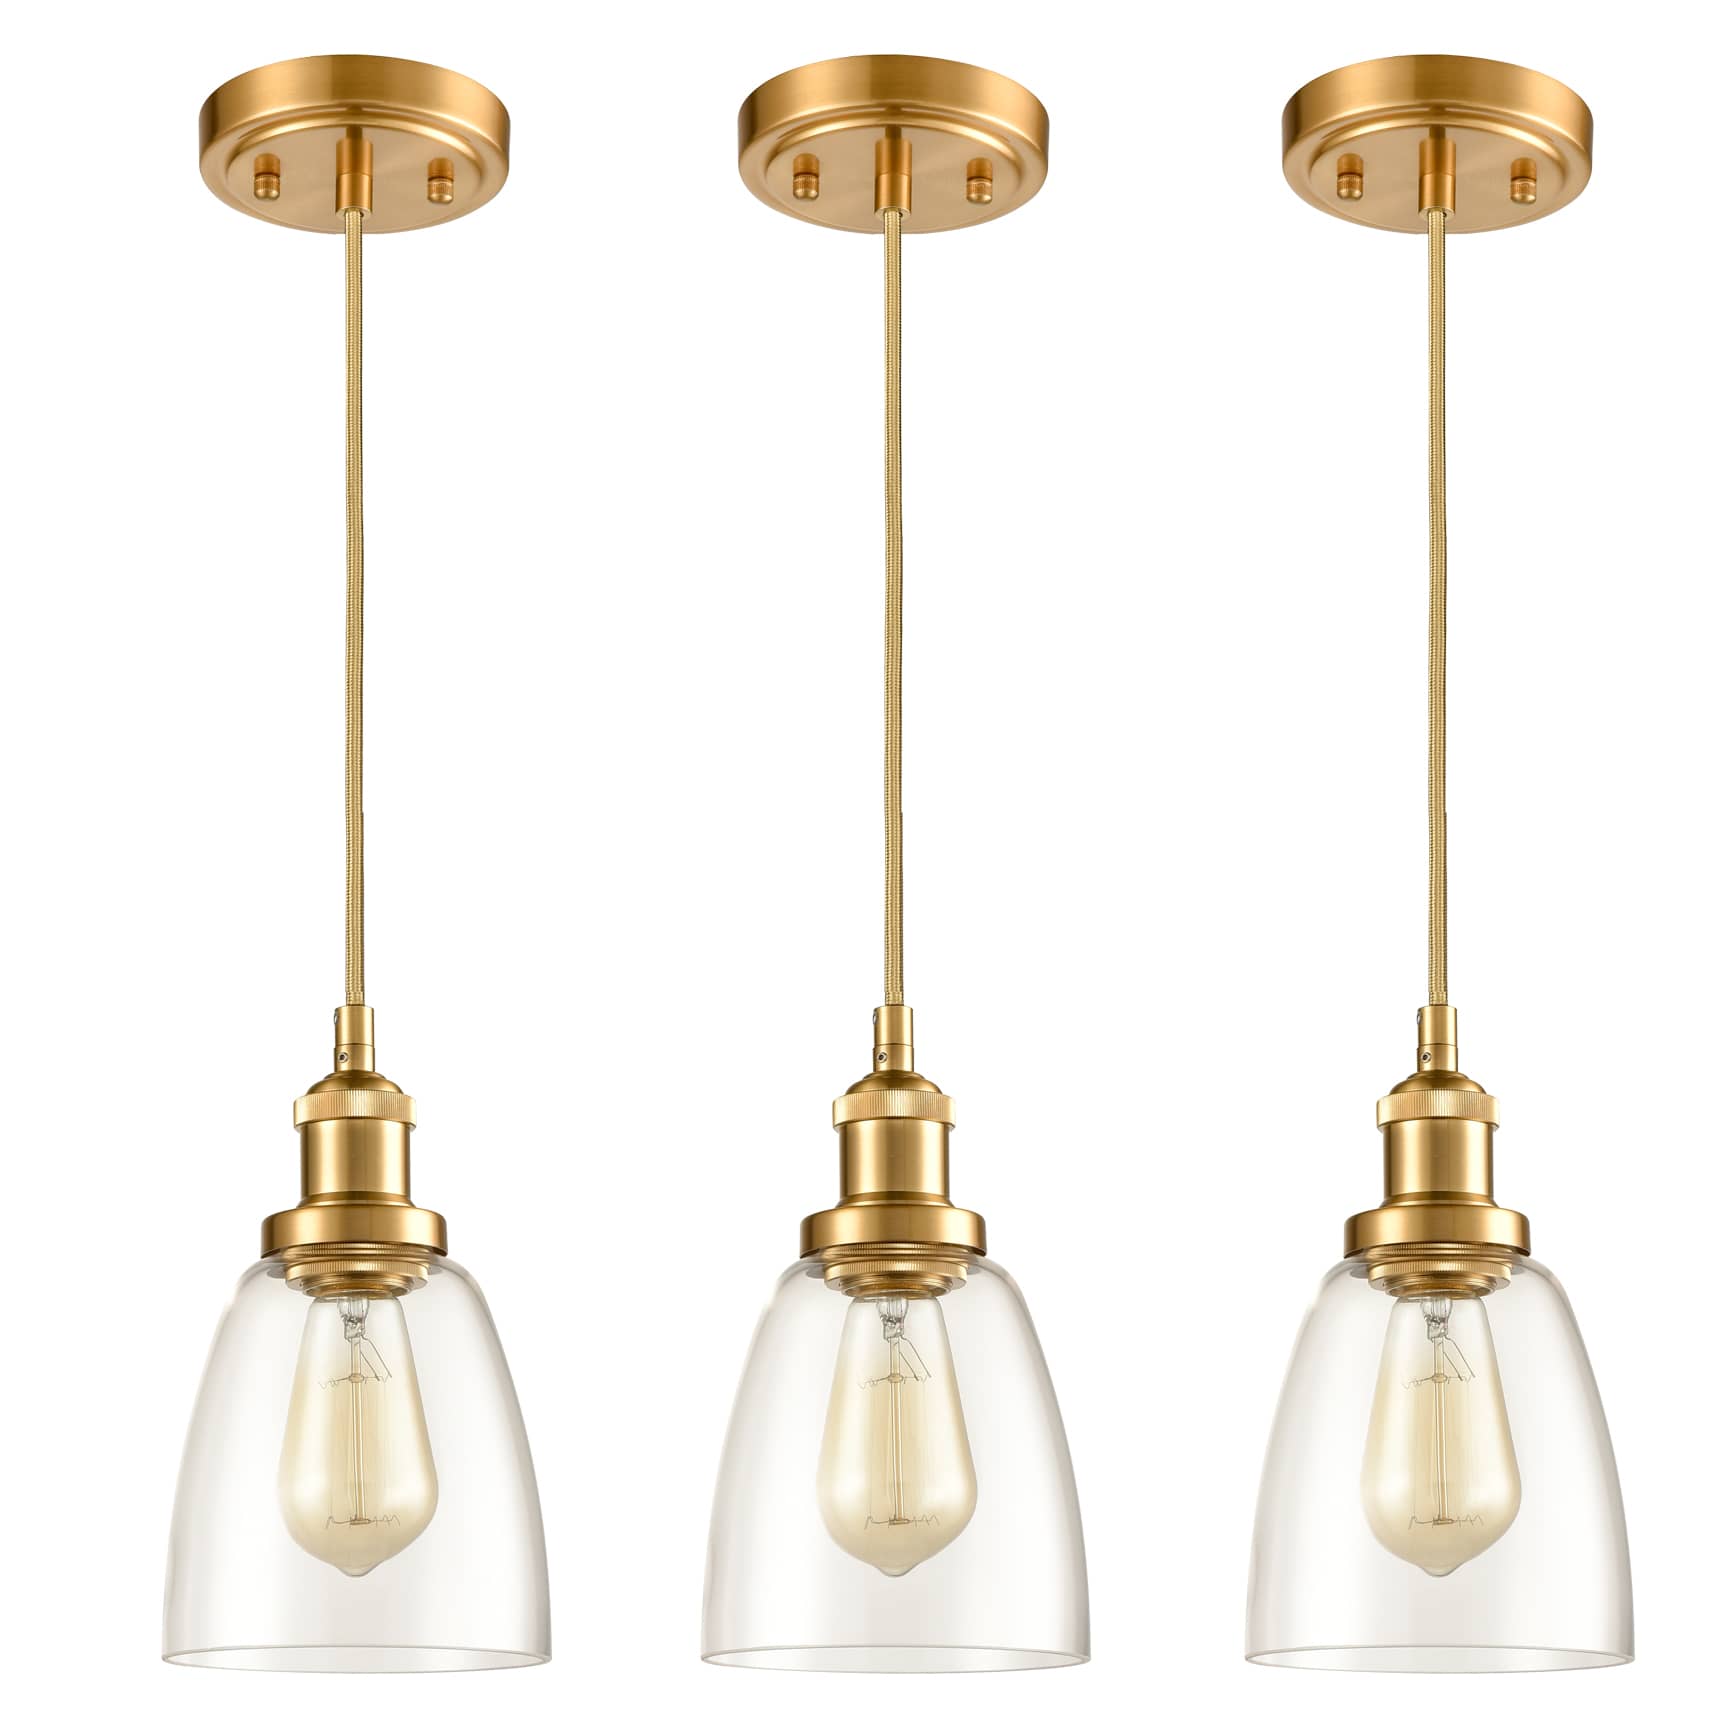 Industrial Style Aluminium & Brass Lamp Holder Ceiling Light Bracket 